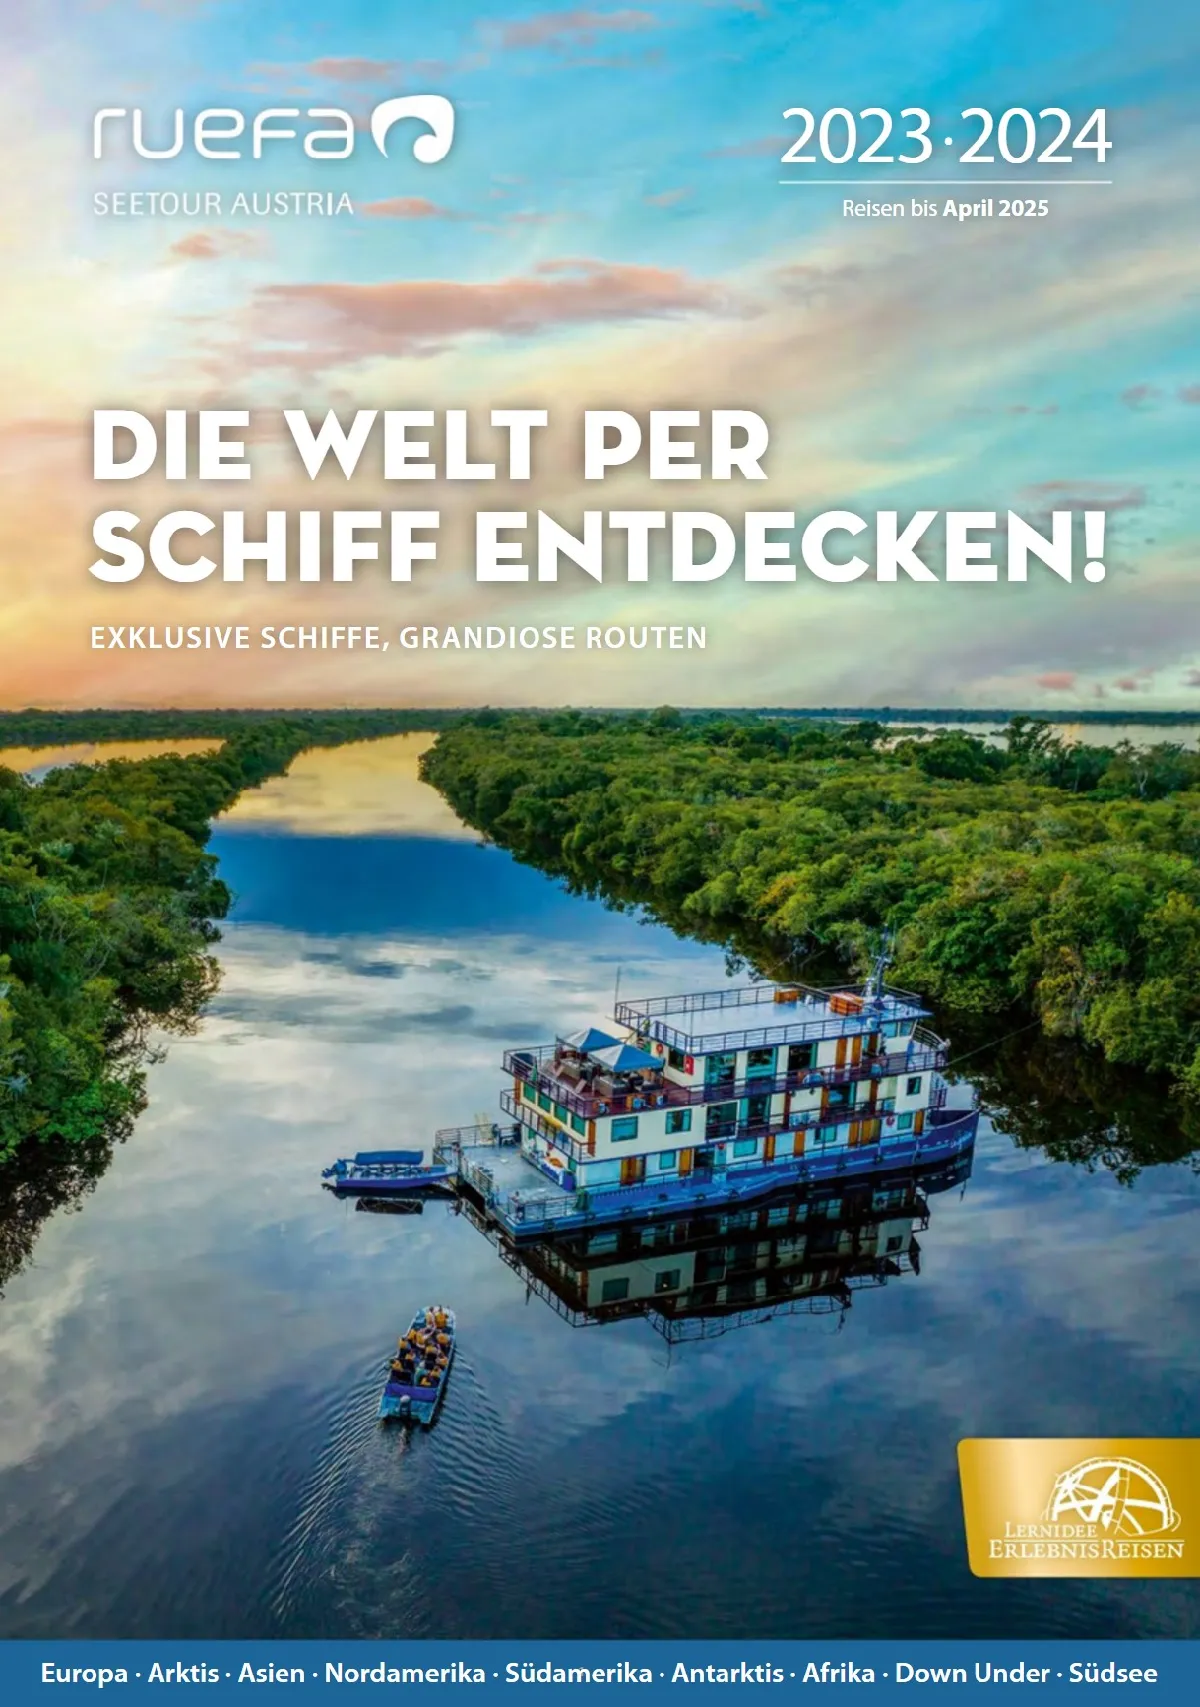 Lernidee Schiffsreisen 2023-2024 catalogue cover